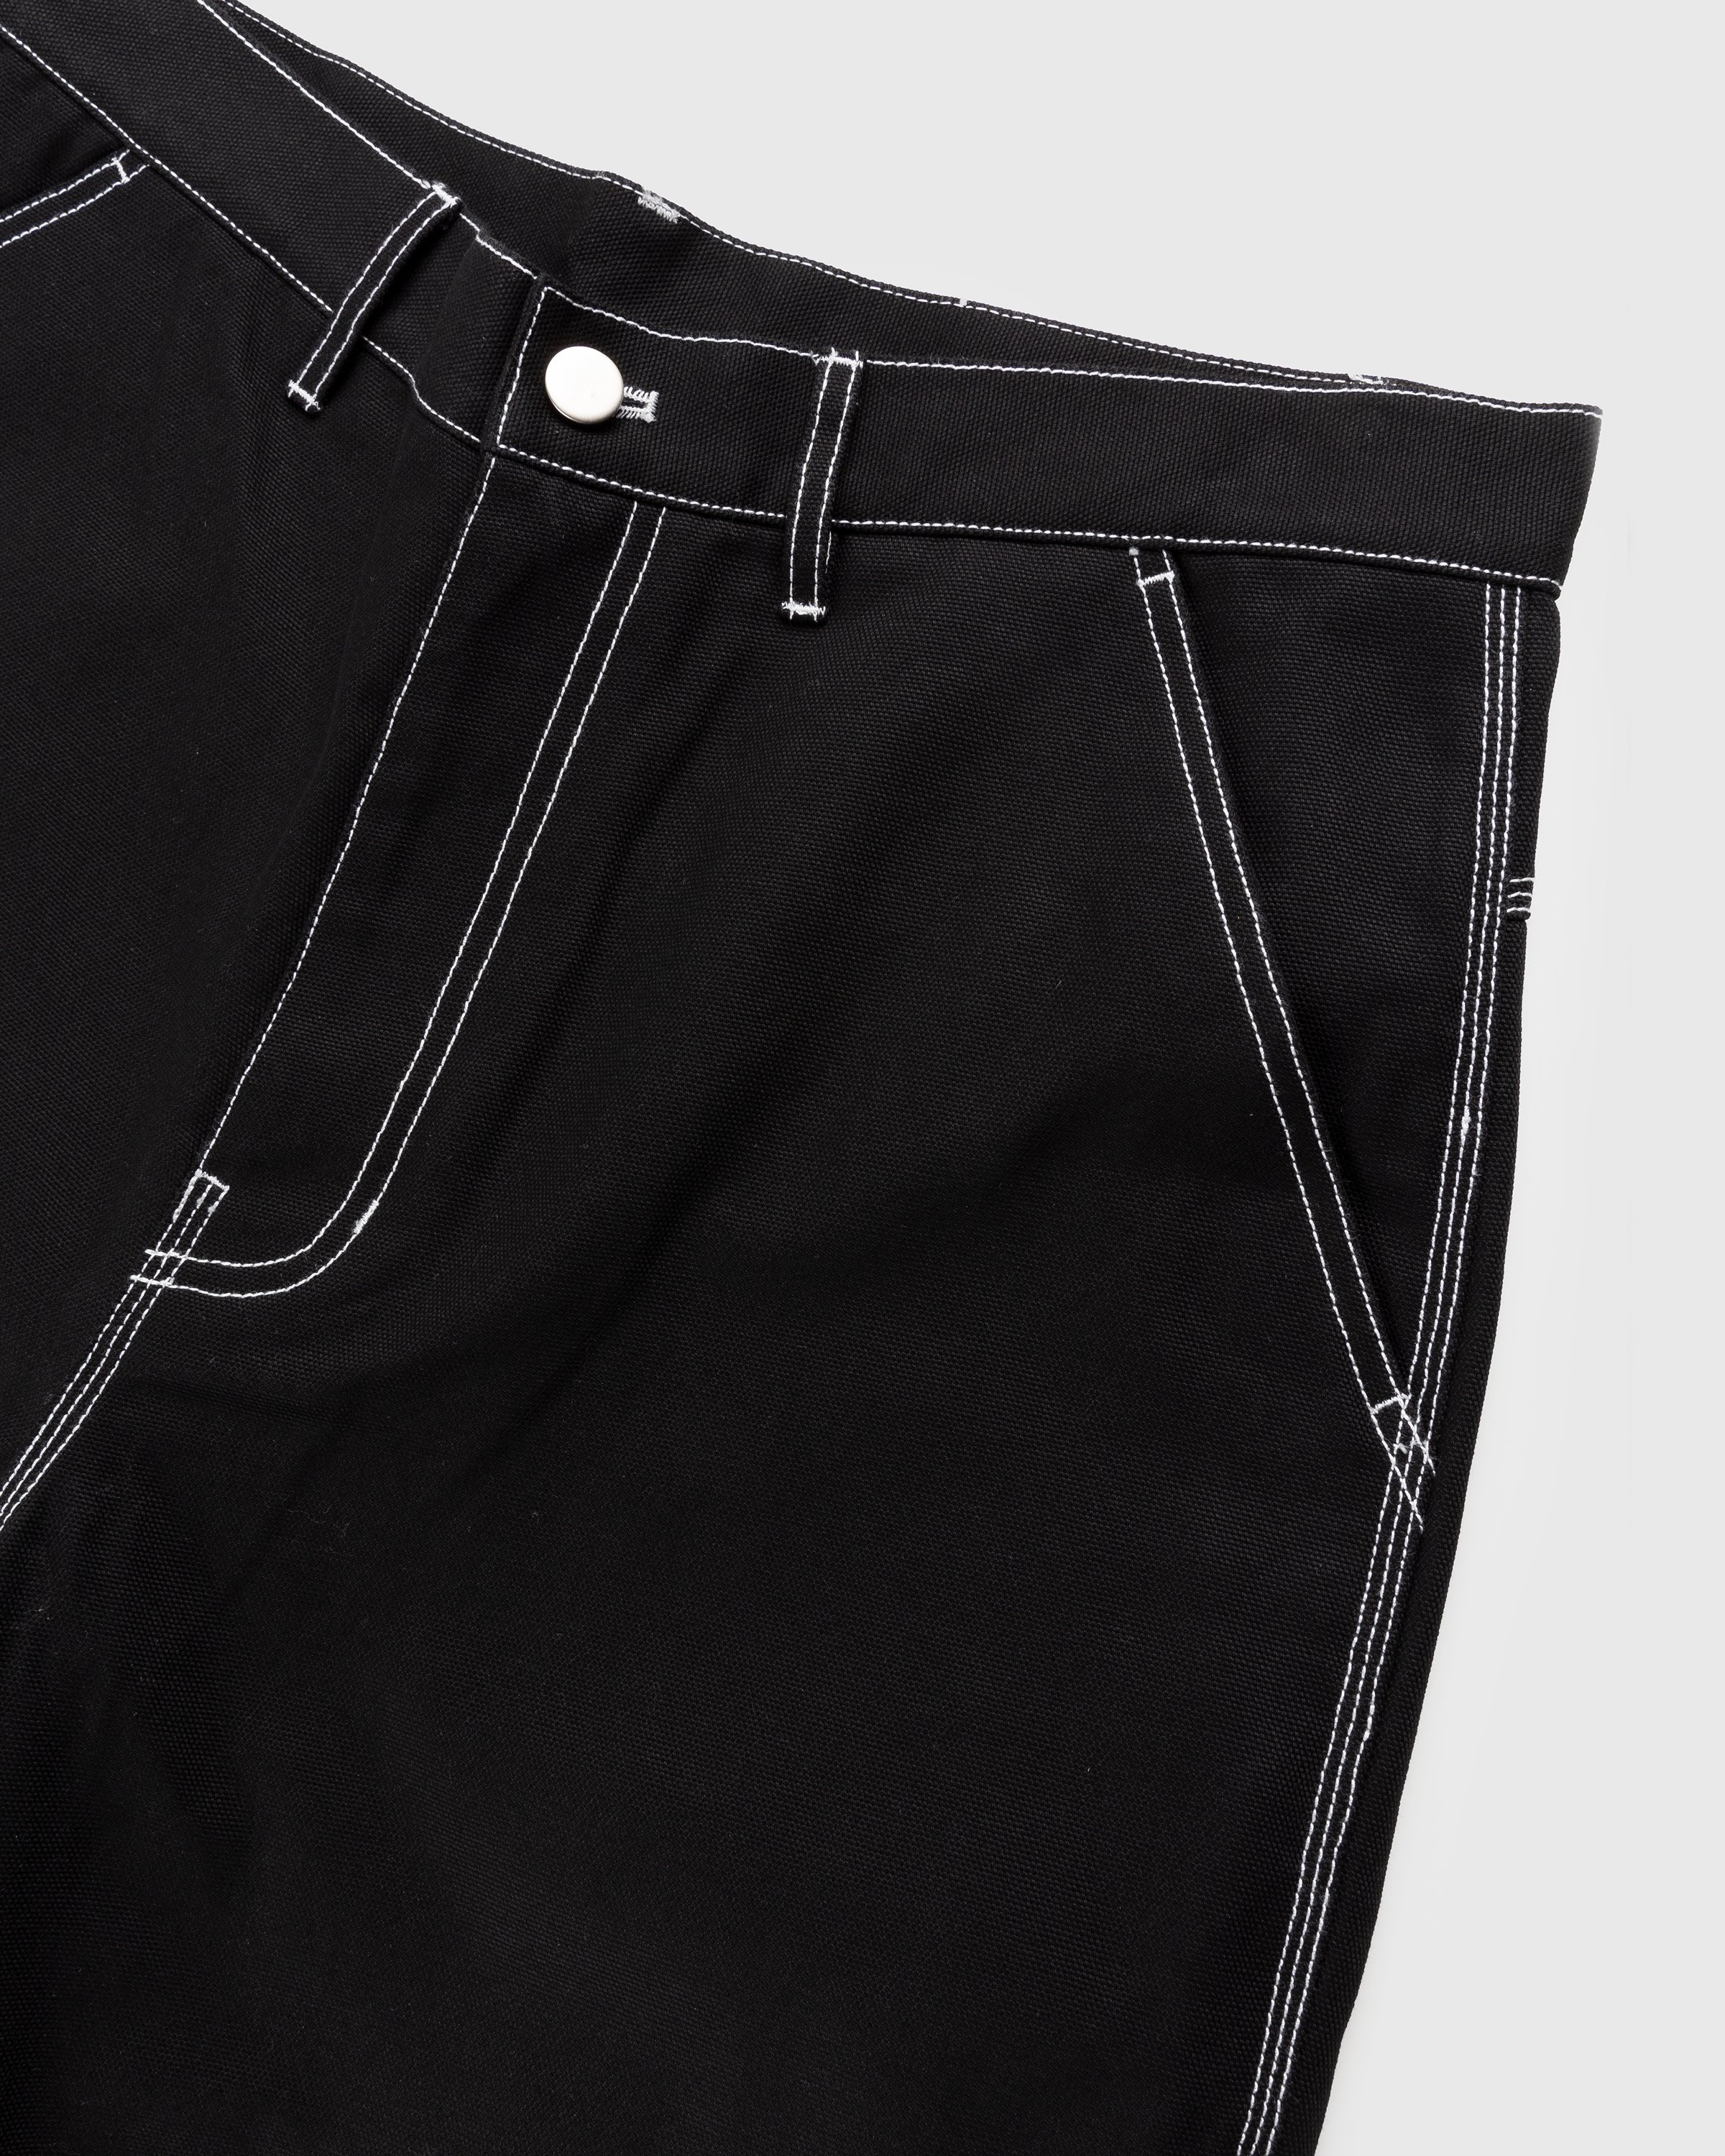 RUF x Highsnobiety – Cotton Work Pants Black - Pants - Black - Image 3